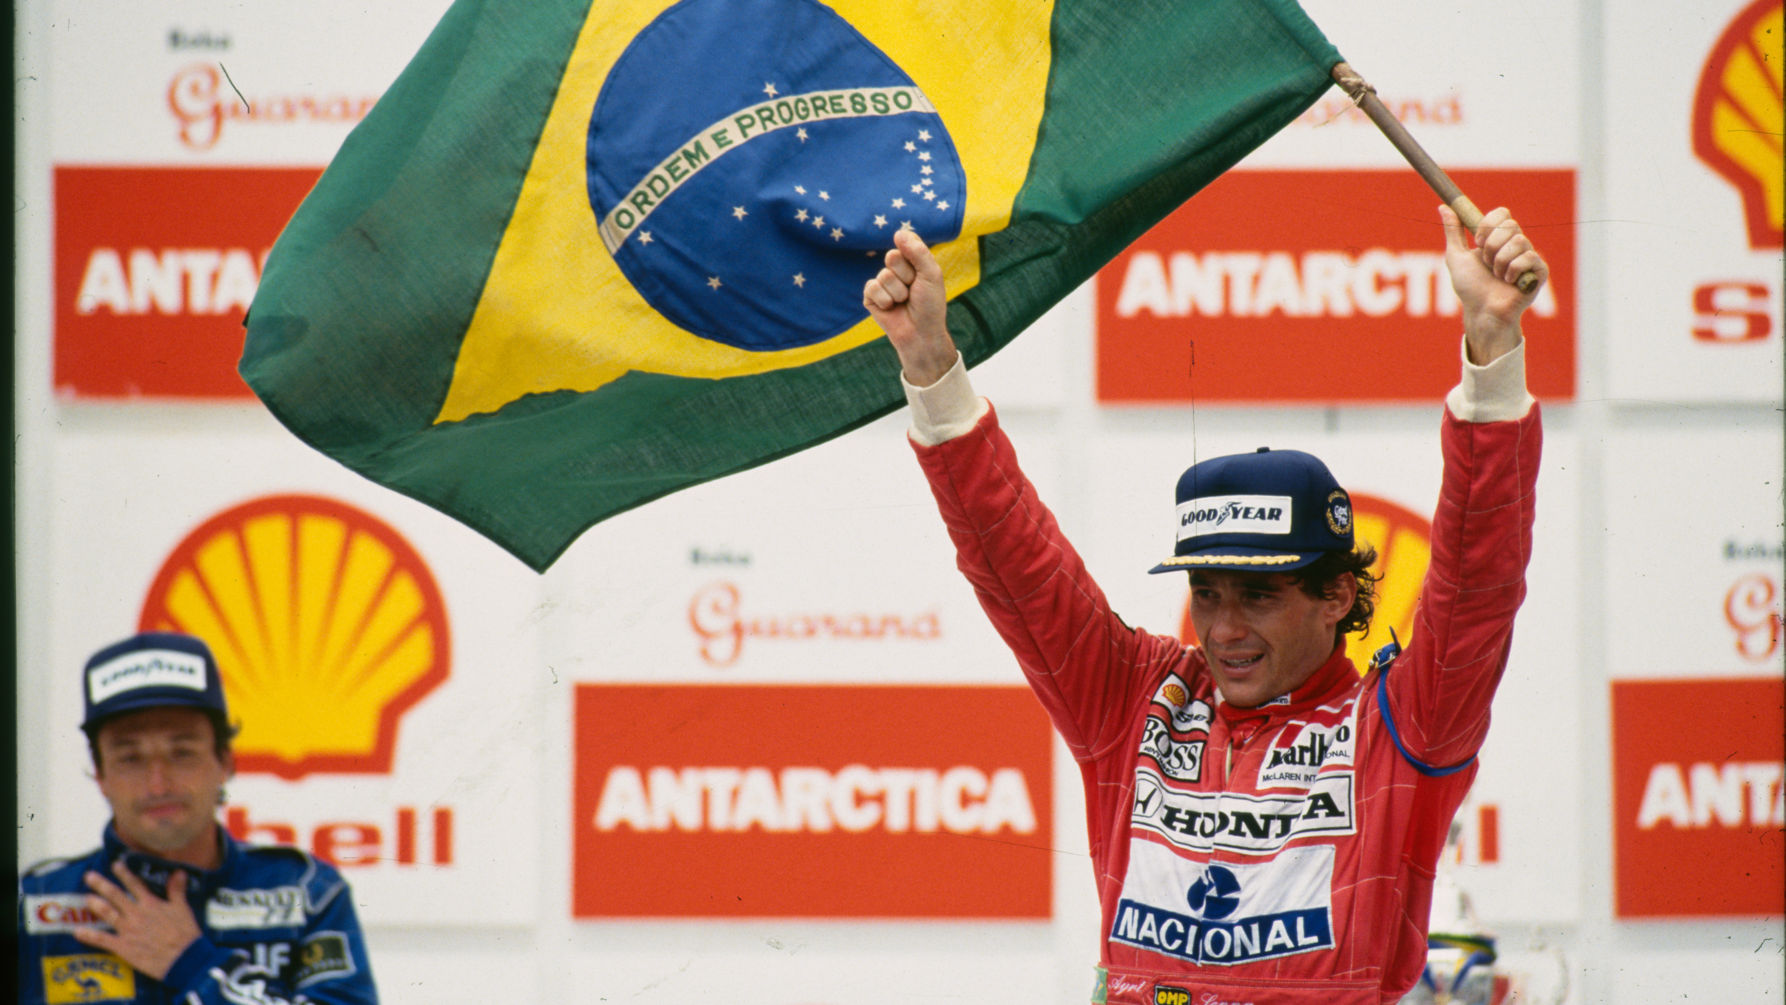 1991 - Ayrton won his first Brazilian Grand Prix. Photographer Credit Norio Koike